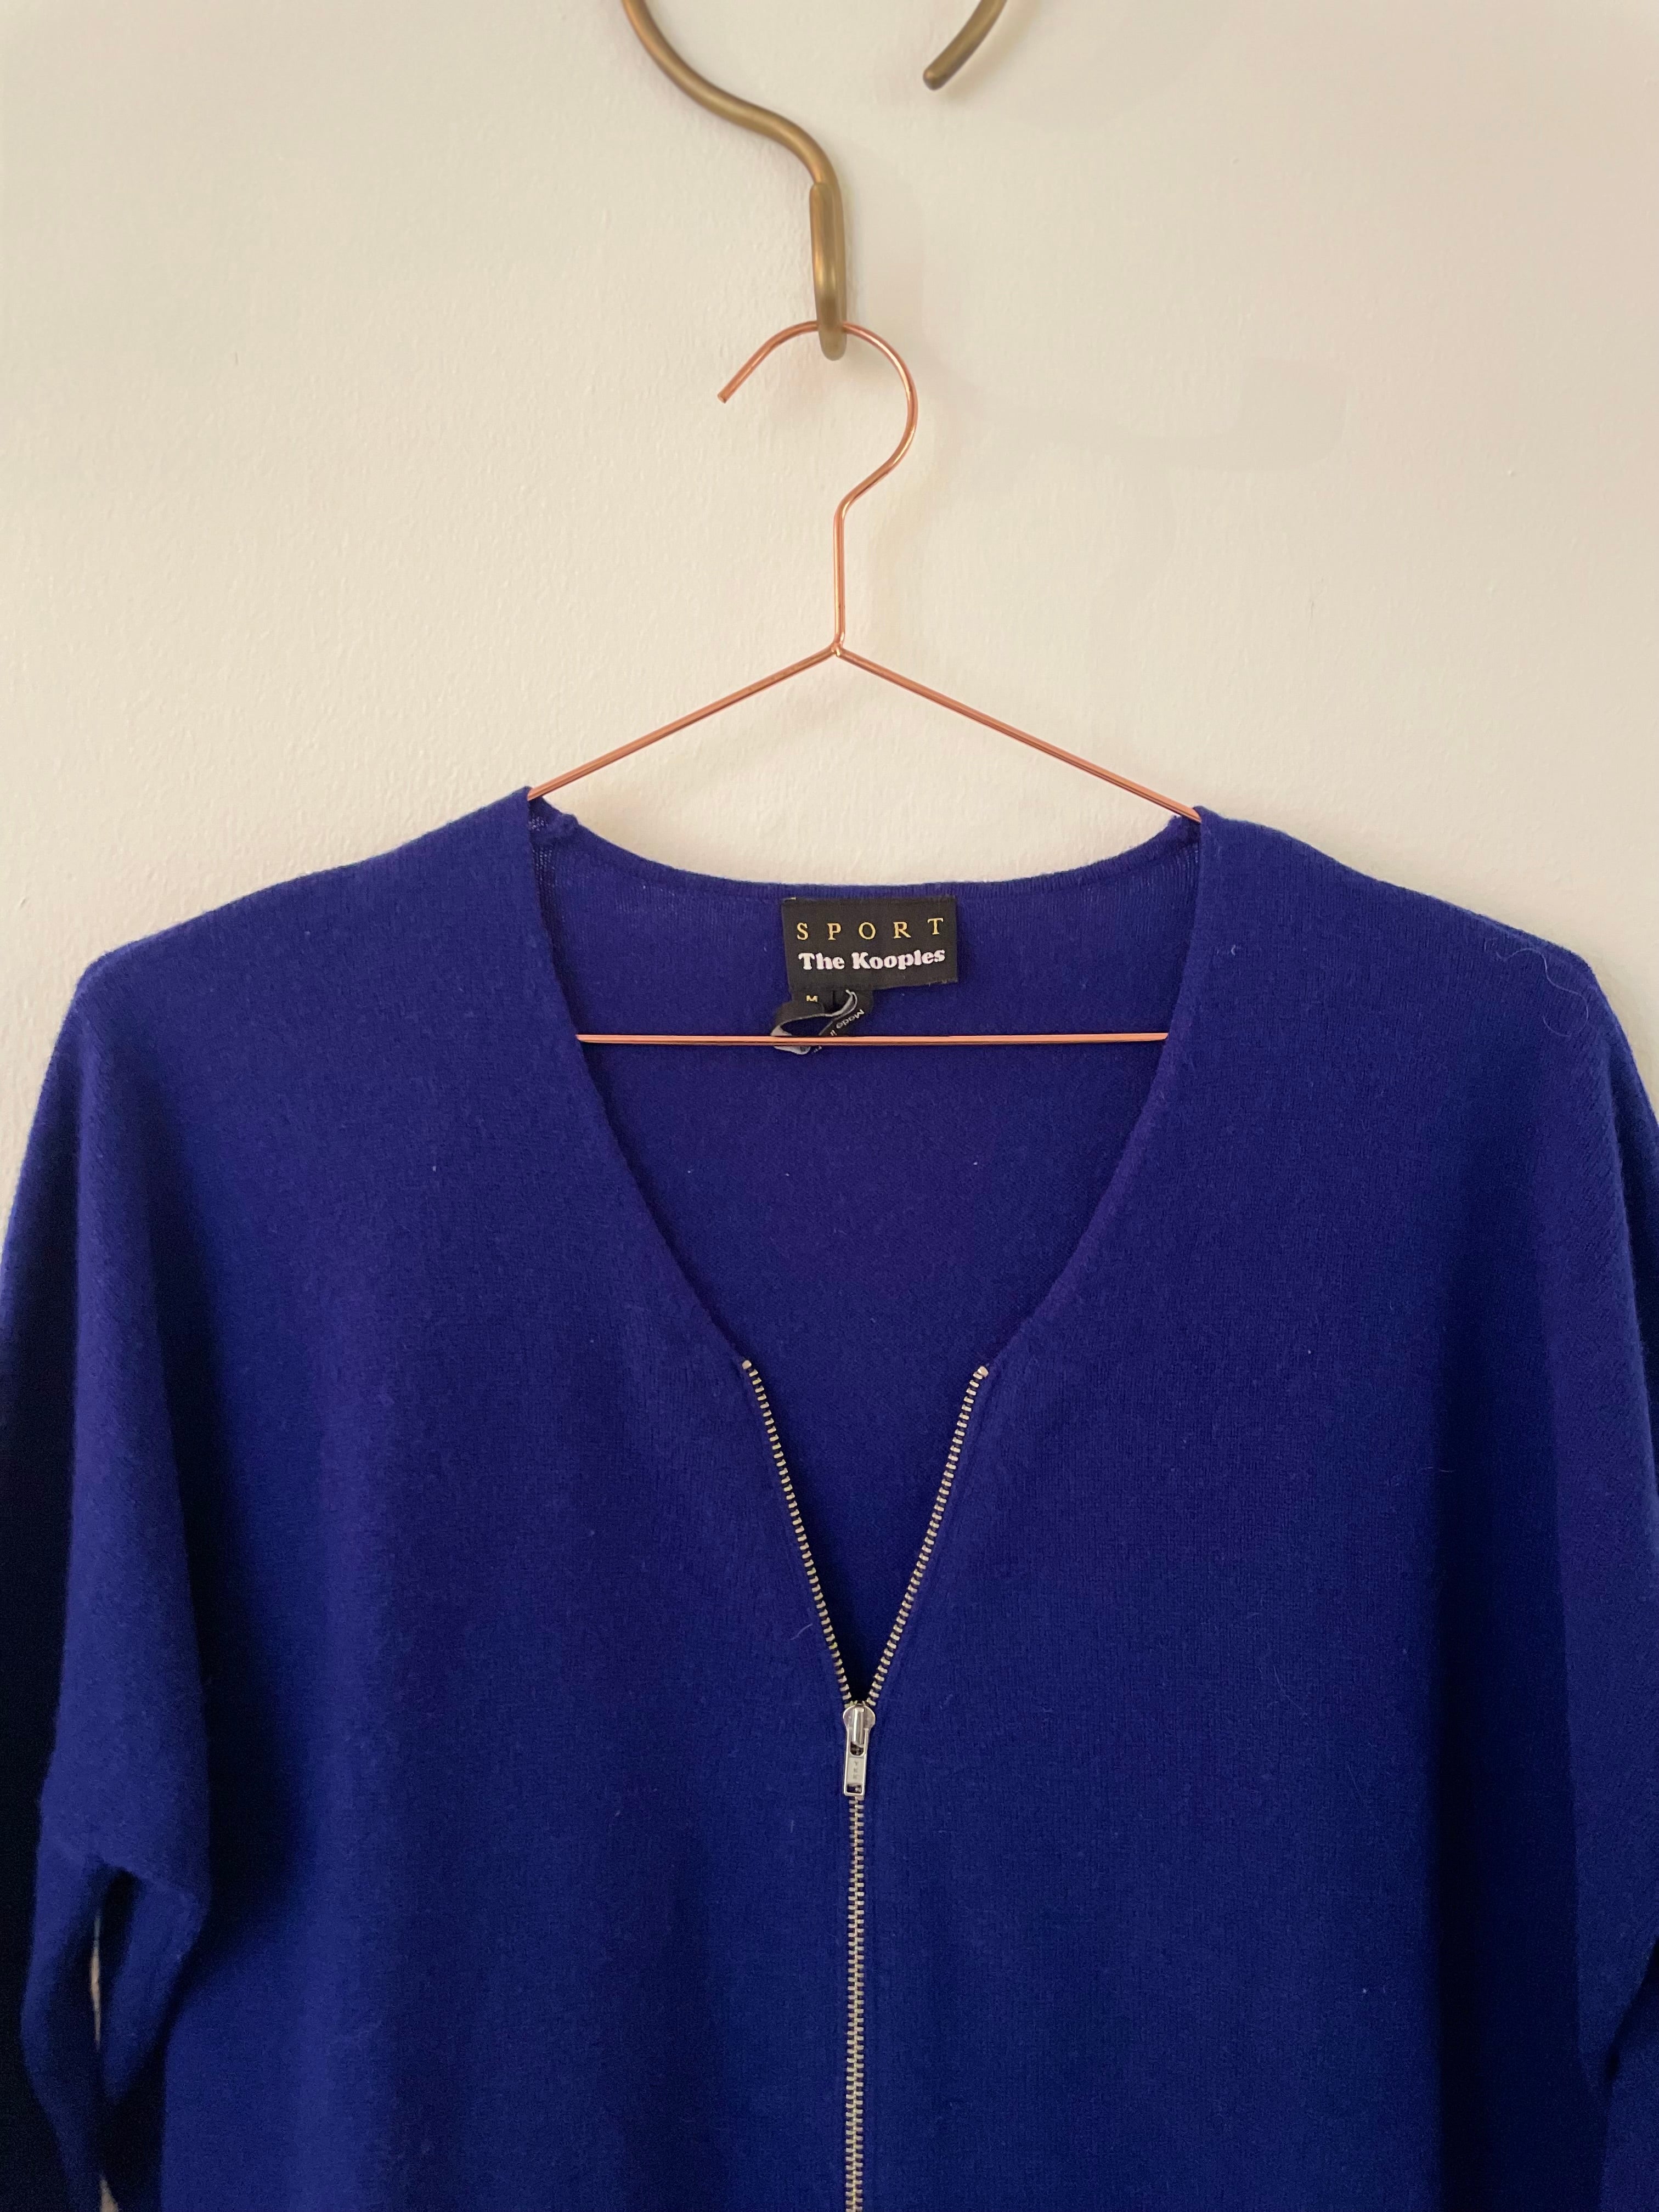 Royal blue knit jumper - THE KOOPLES - M